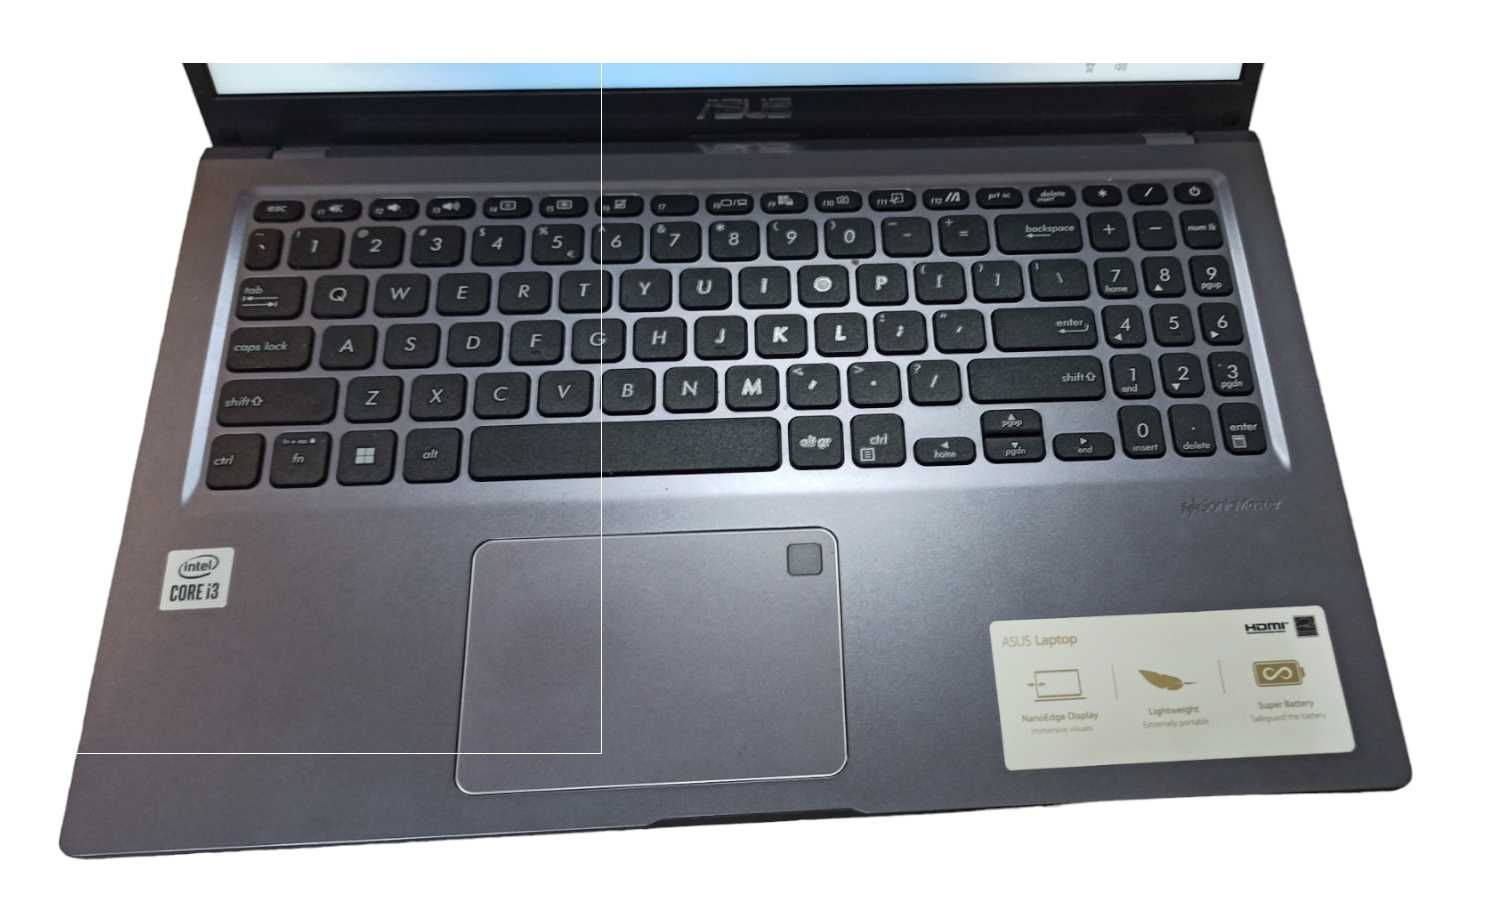 Laptop Asus VivoBook 15 X515JA i3 Gwarancja /LOMBARD/Częstochowa/Raków